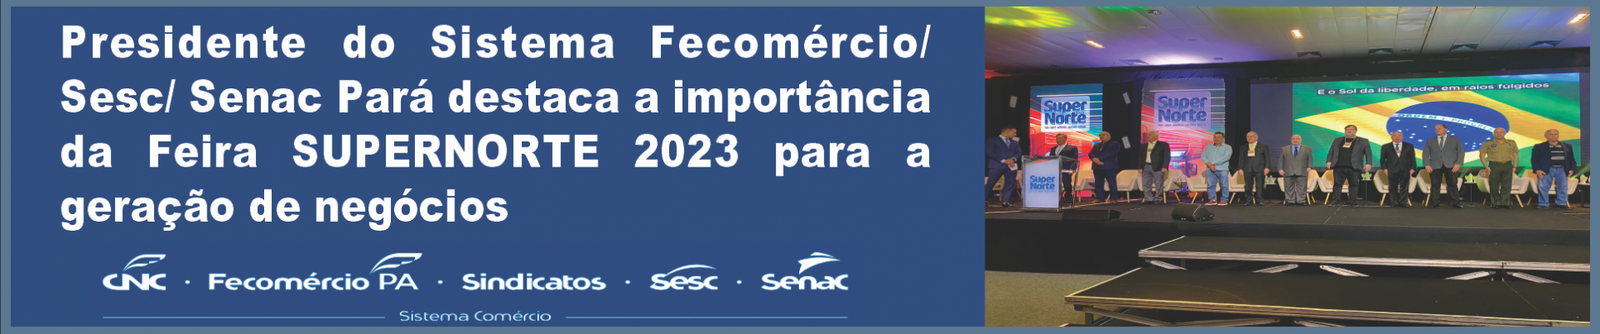 Presidente do Sistema Fecomércio / Sesc / Senac Pará destaca a importância da Super Norte 2023